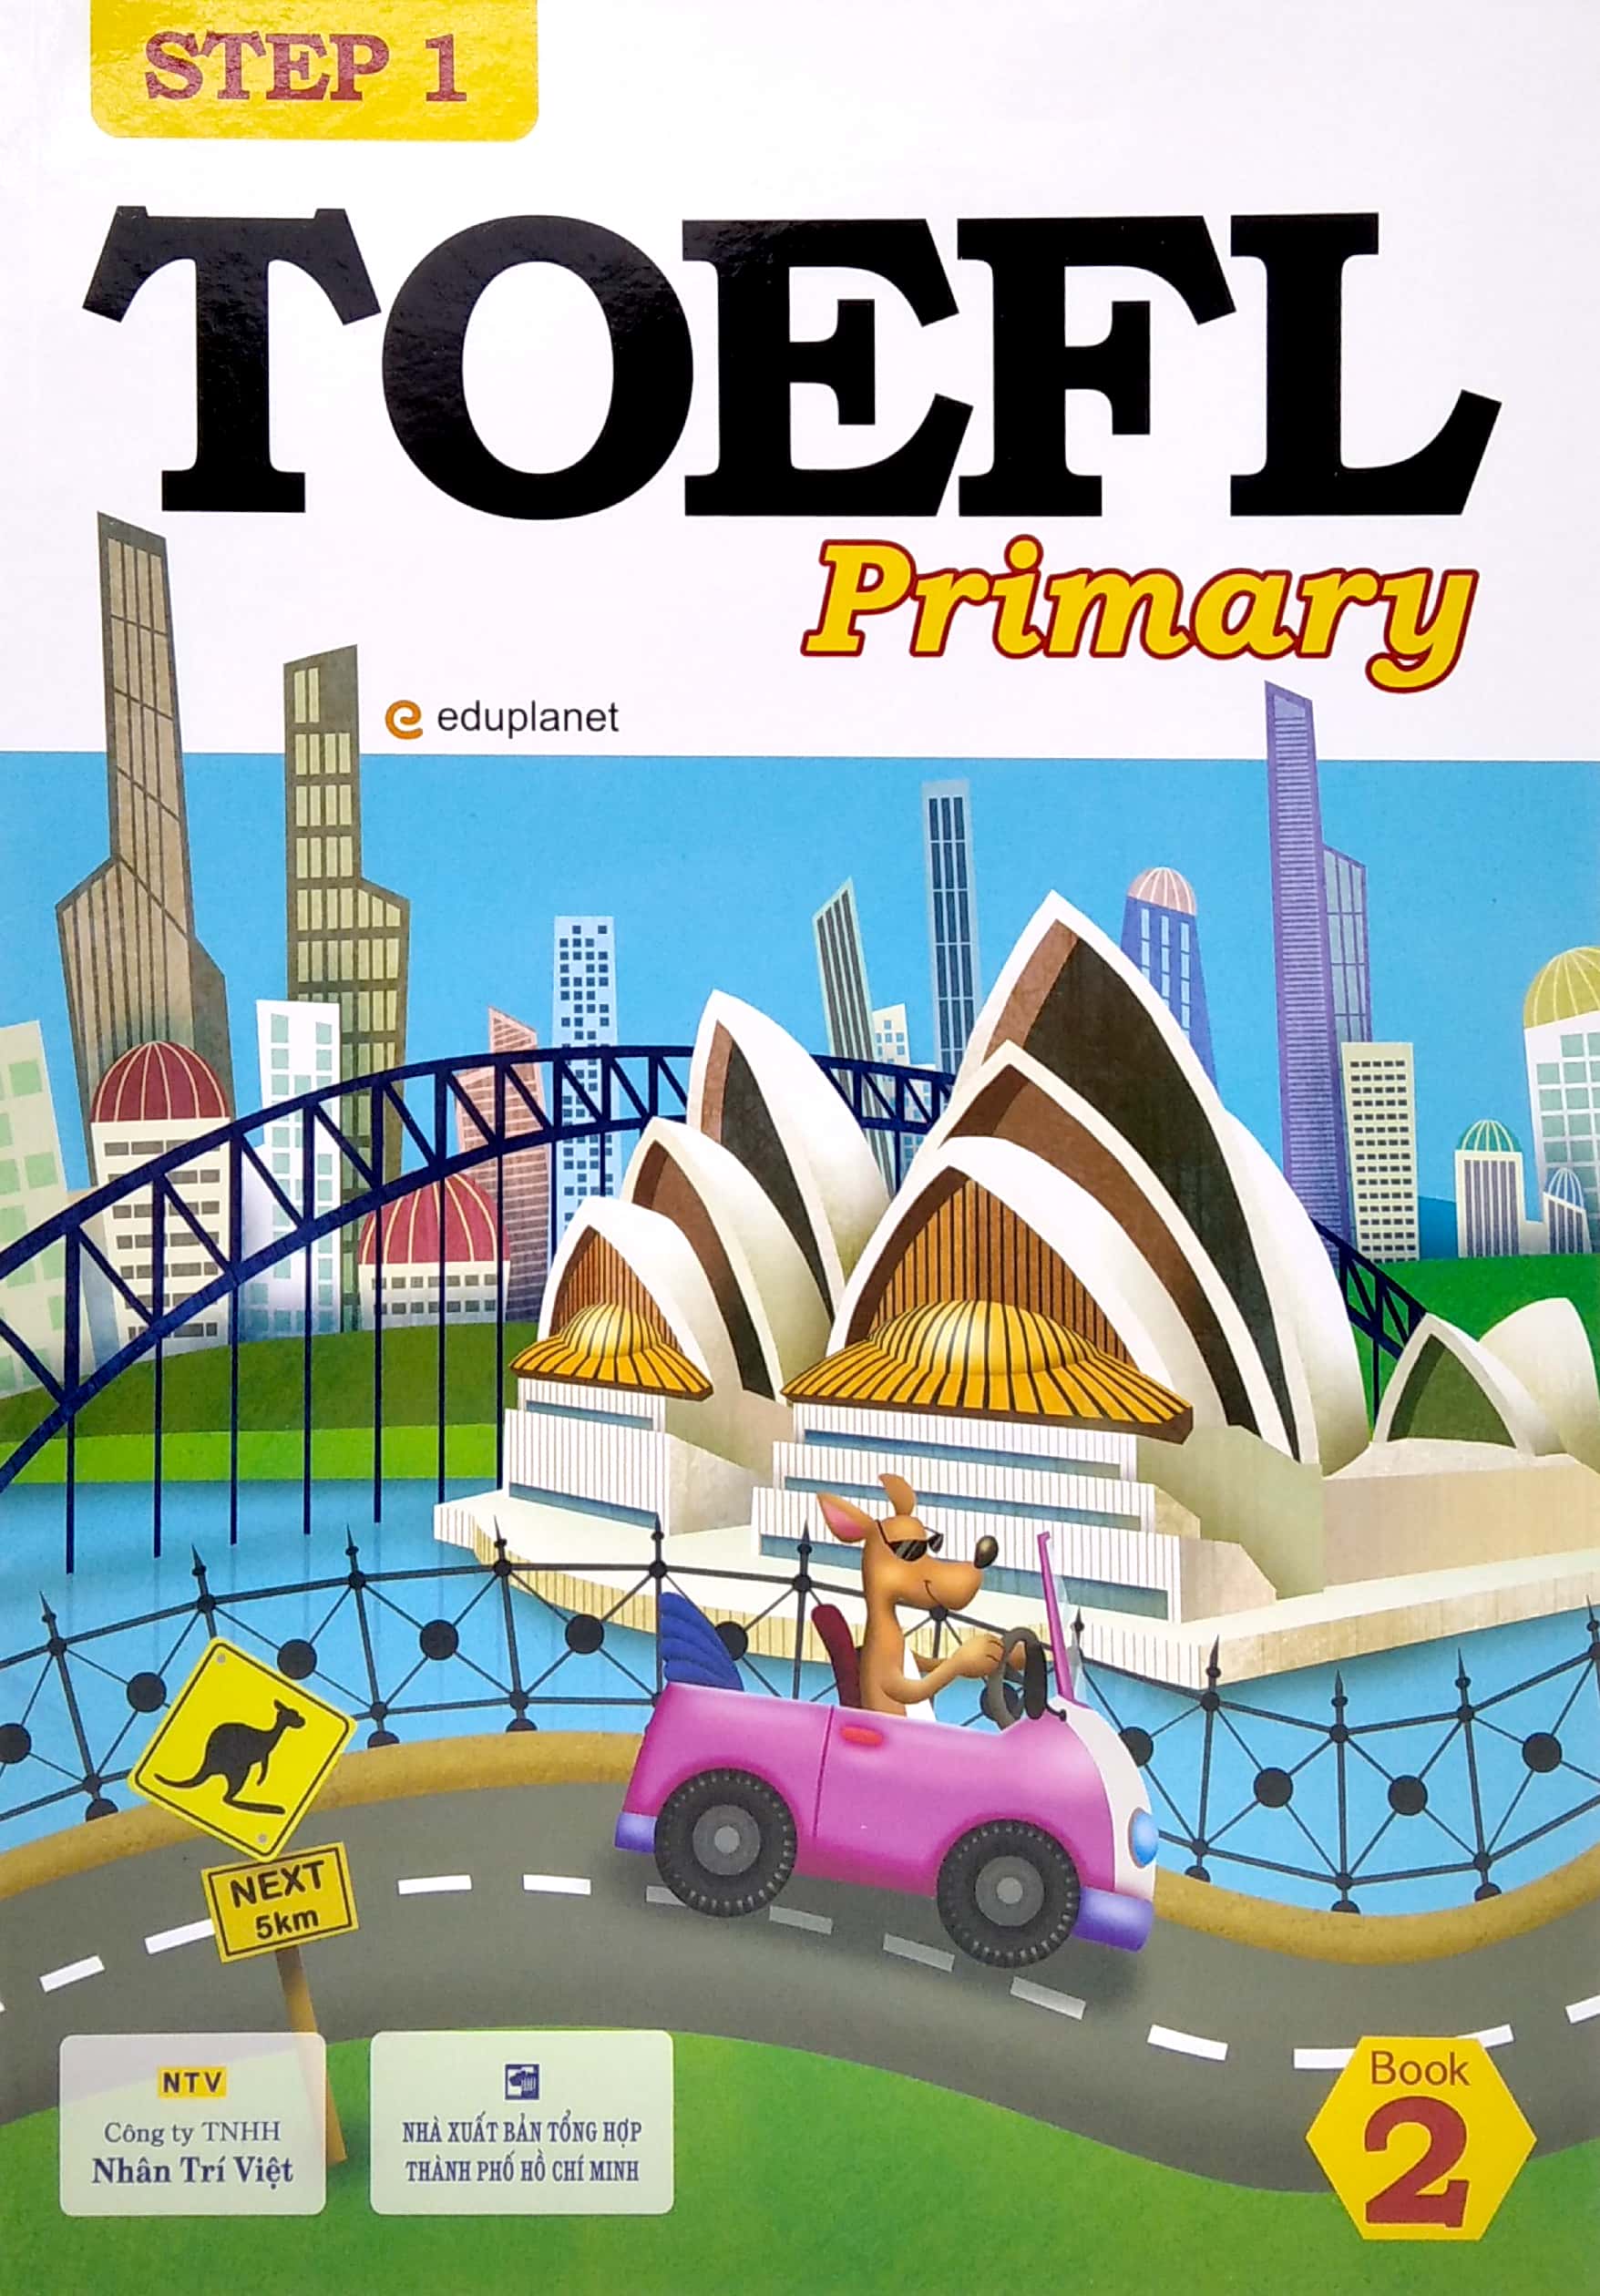 Toefl Primary Step 1 - Book 2 PDF